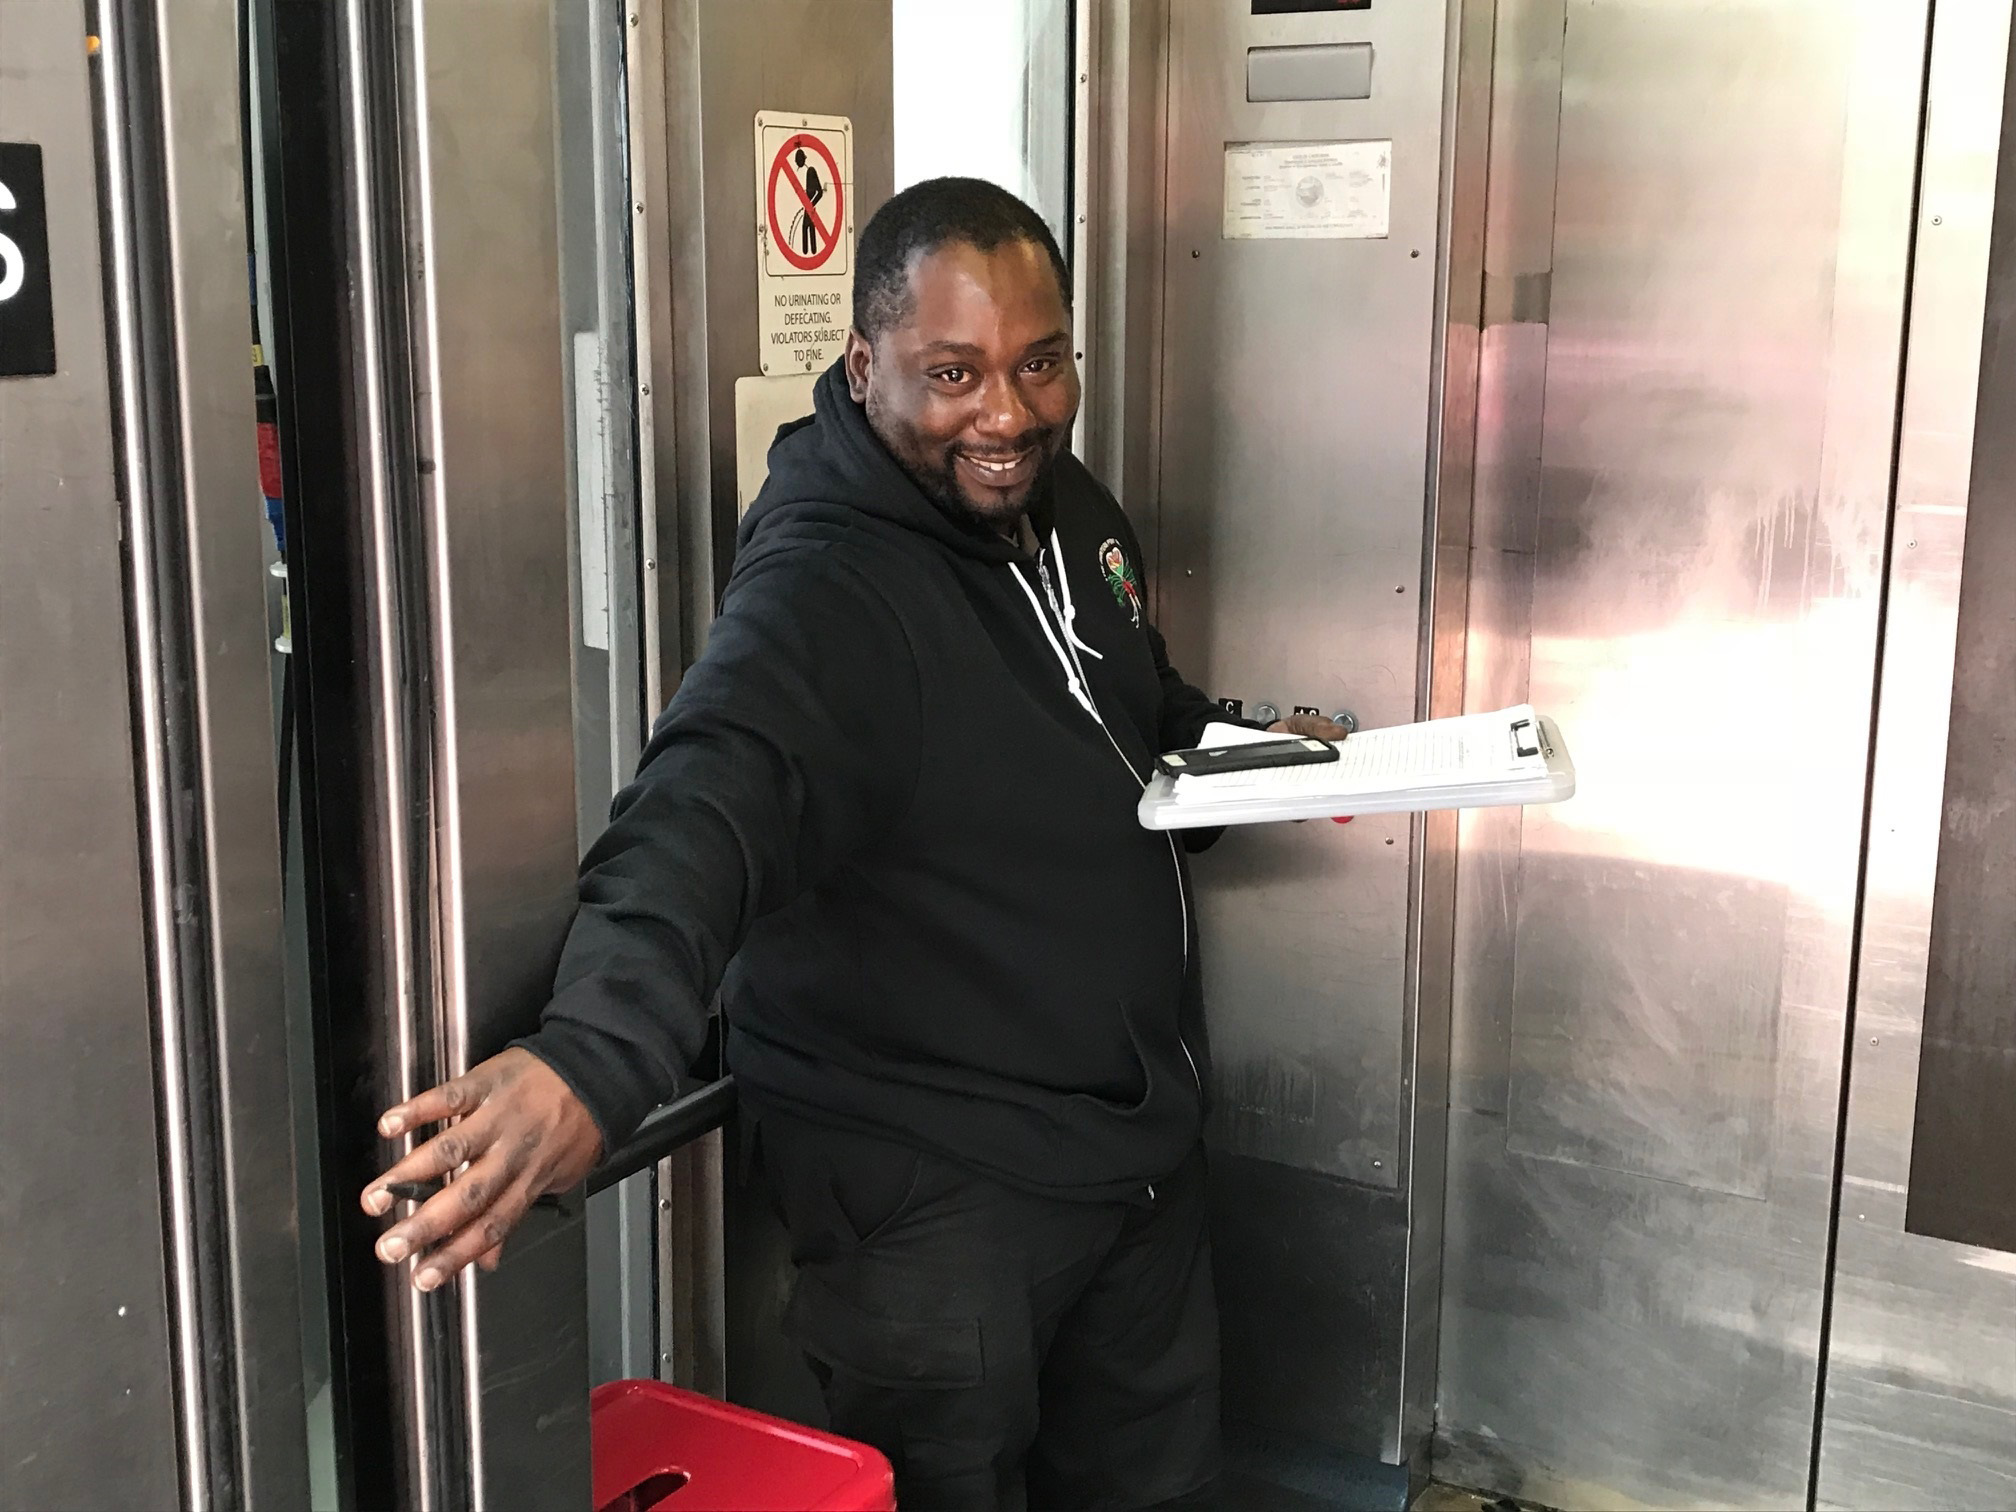 Charles Jones greets customers at the elevator